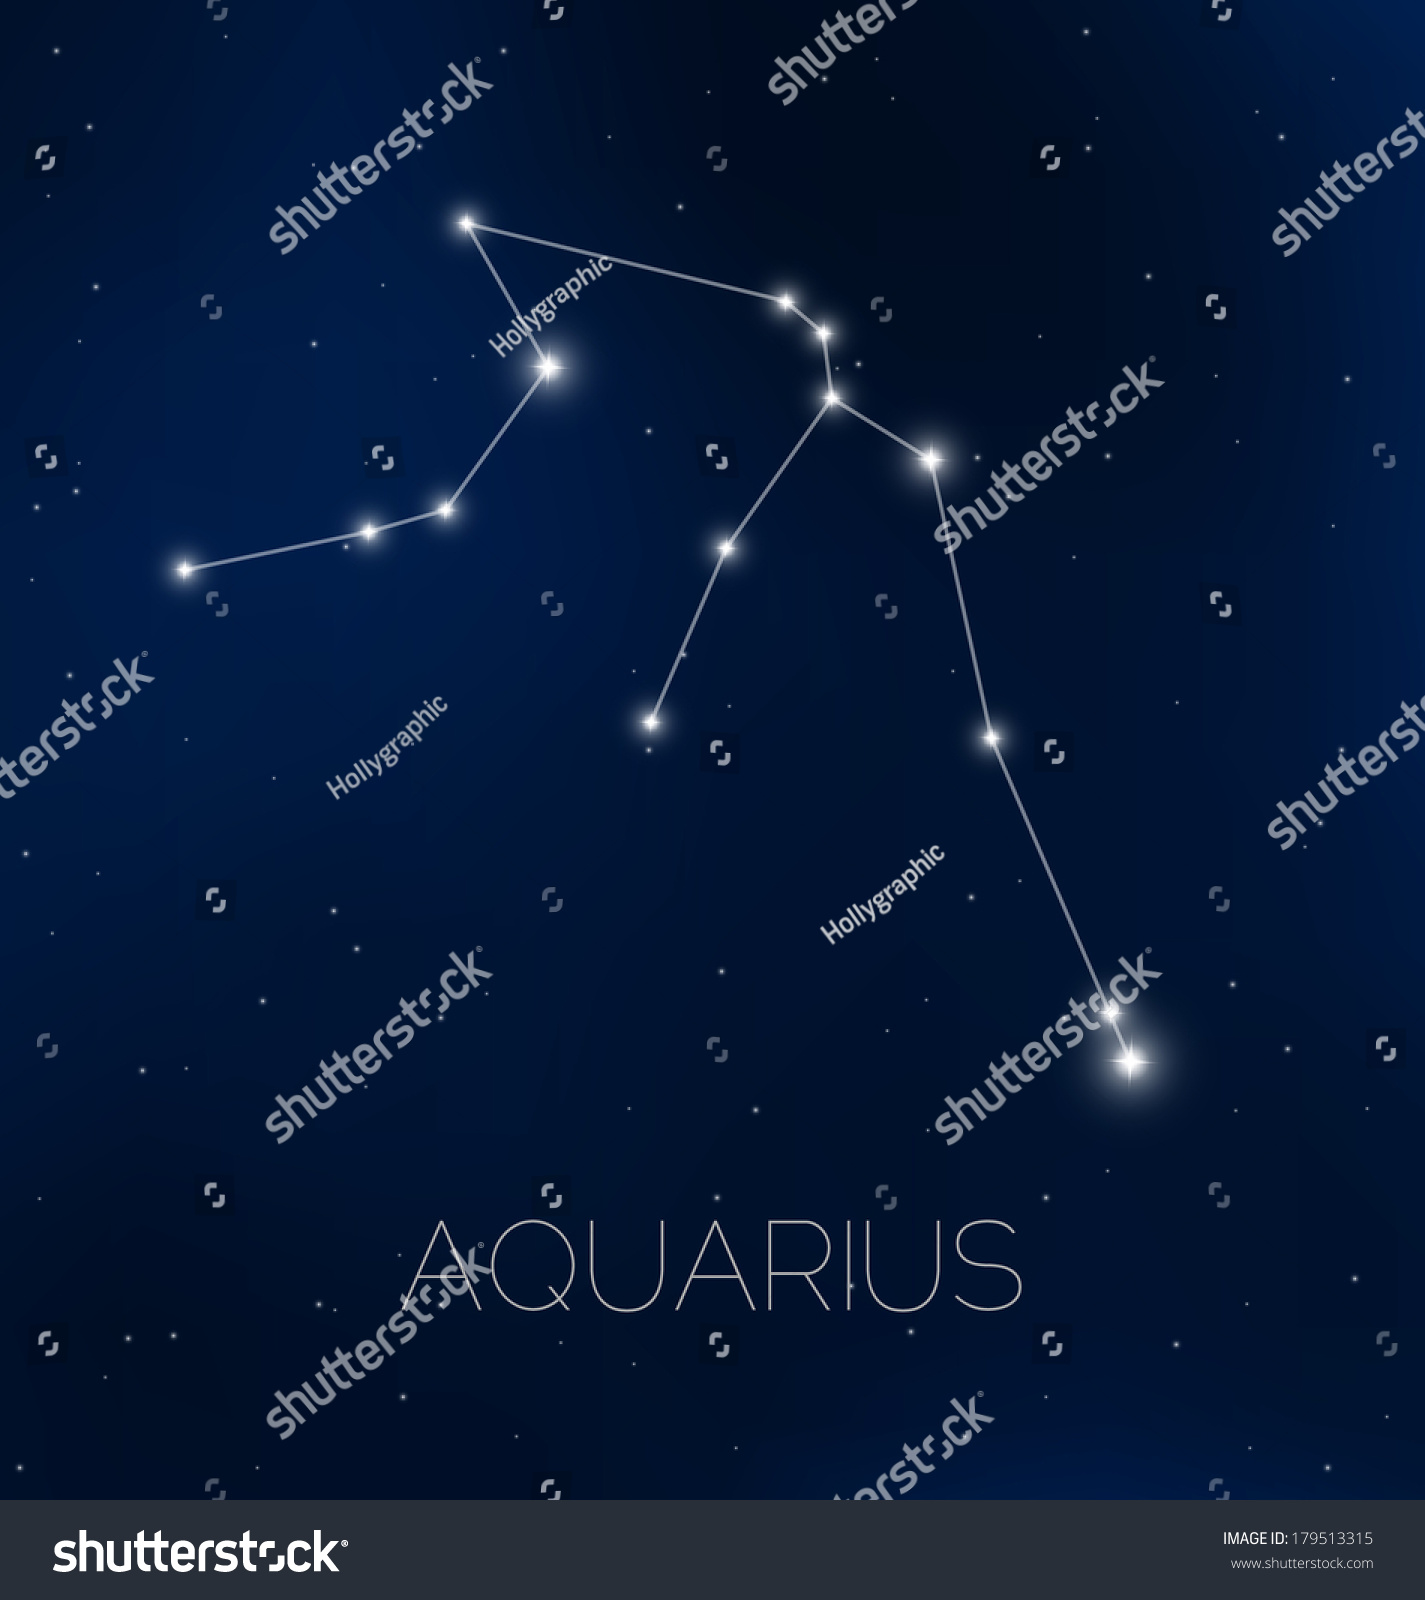 Aquarius Constellation Night Sky Stock Vector 179513315 - Shutterstock